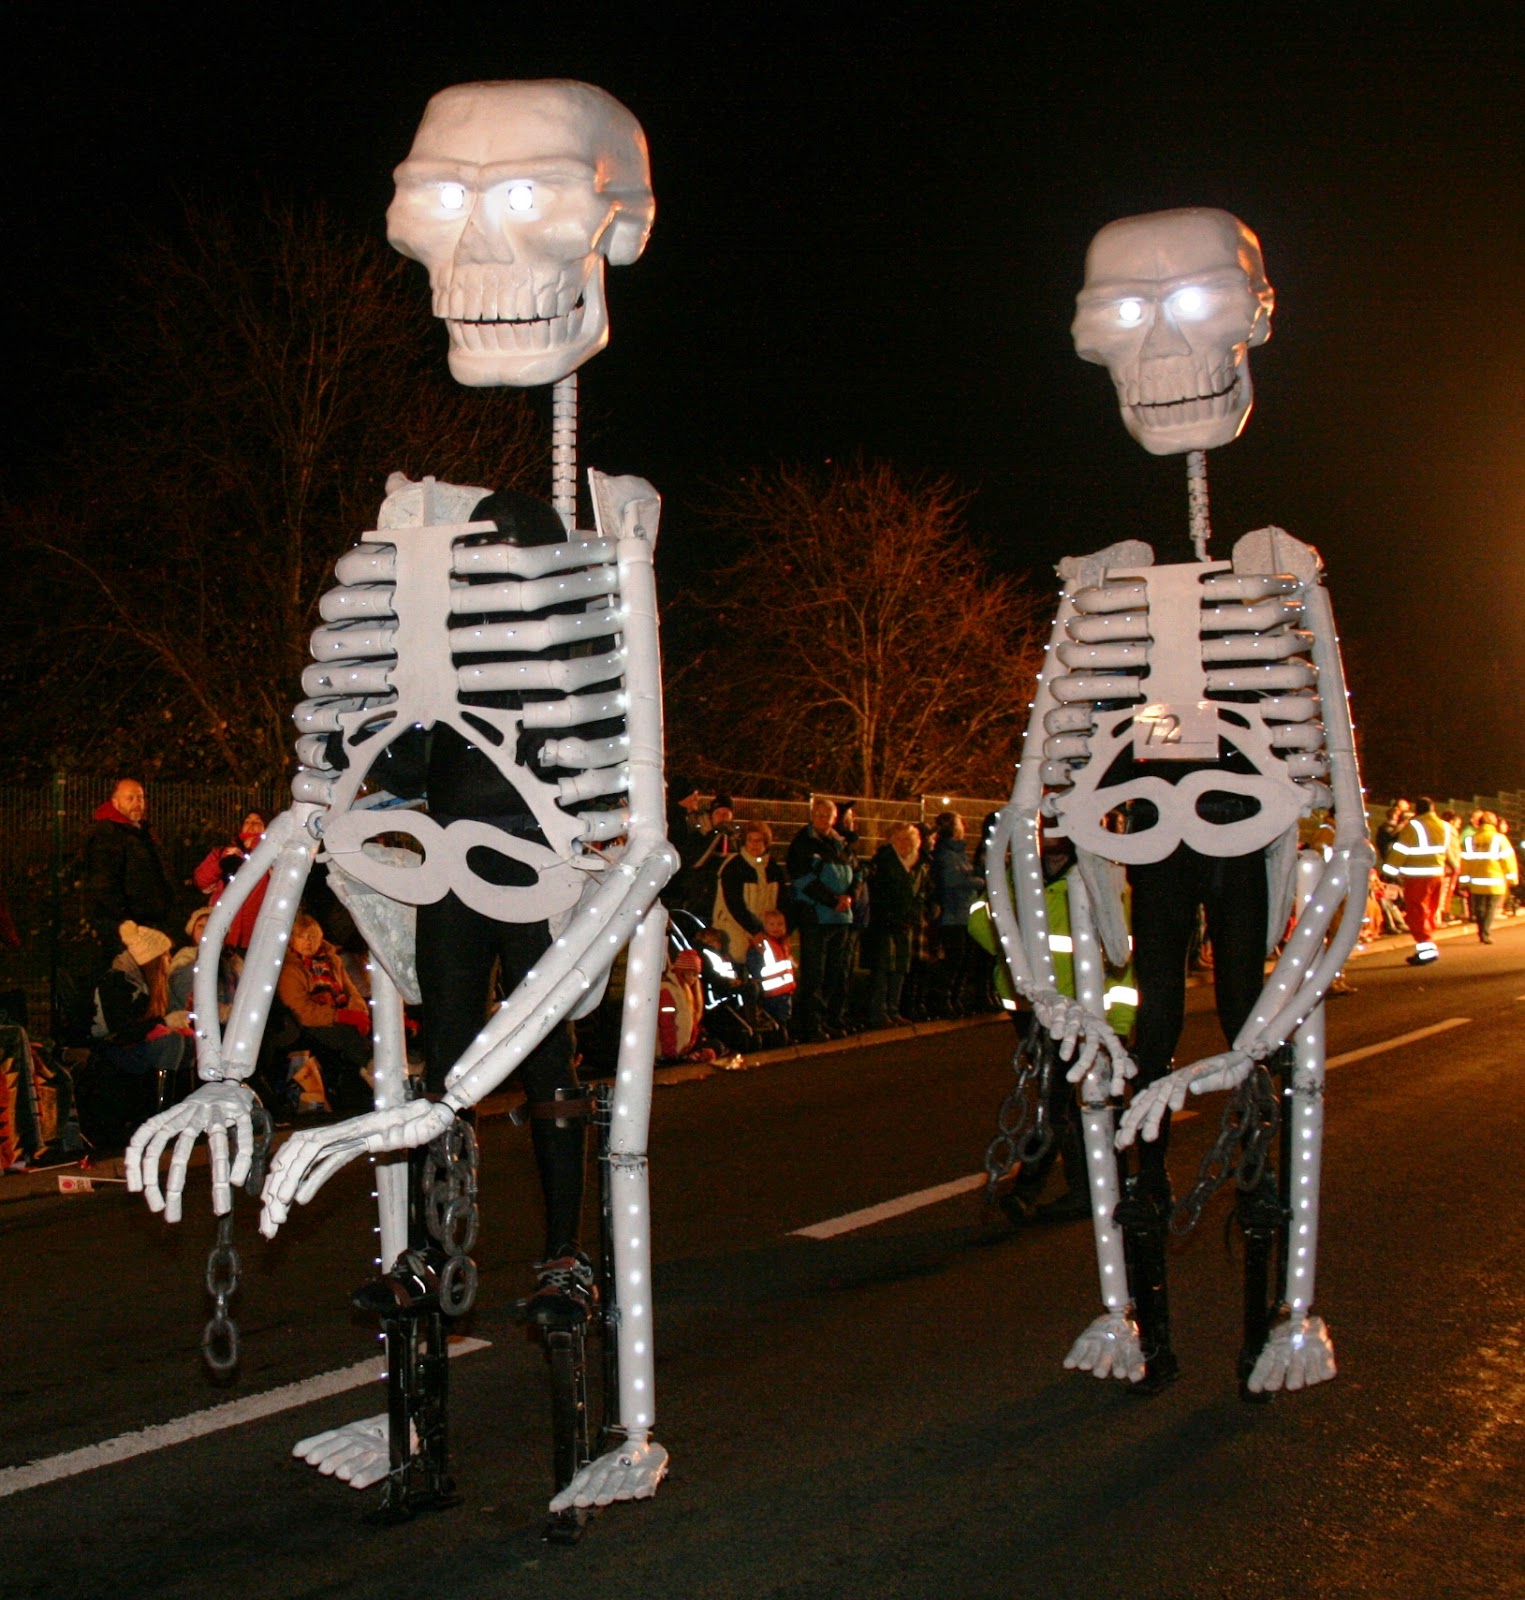 Somerset Carnival Season 2014 - Jiggles Carnival Club with 'Bones'